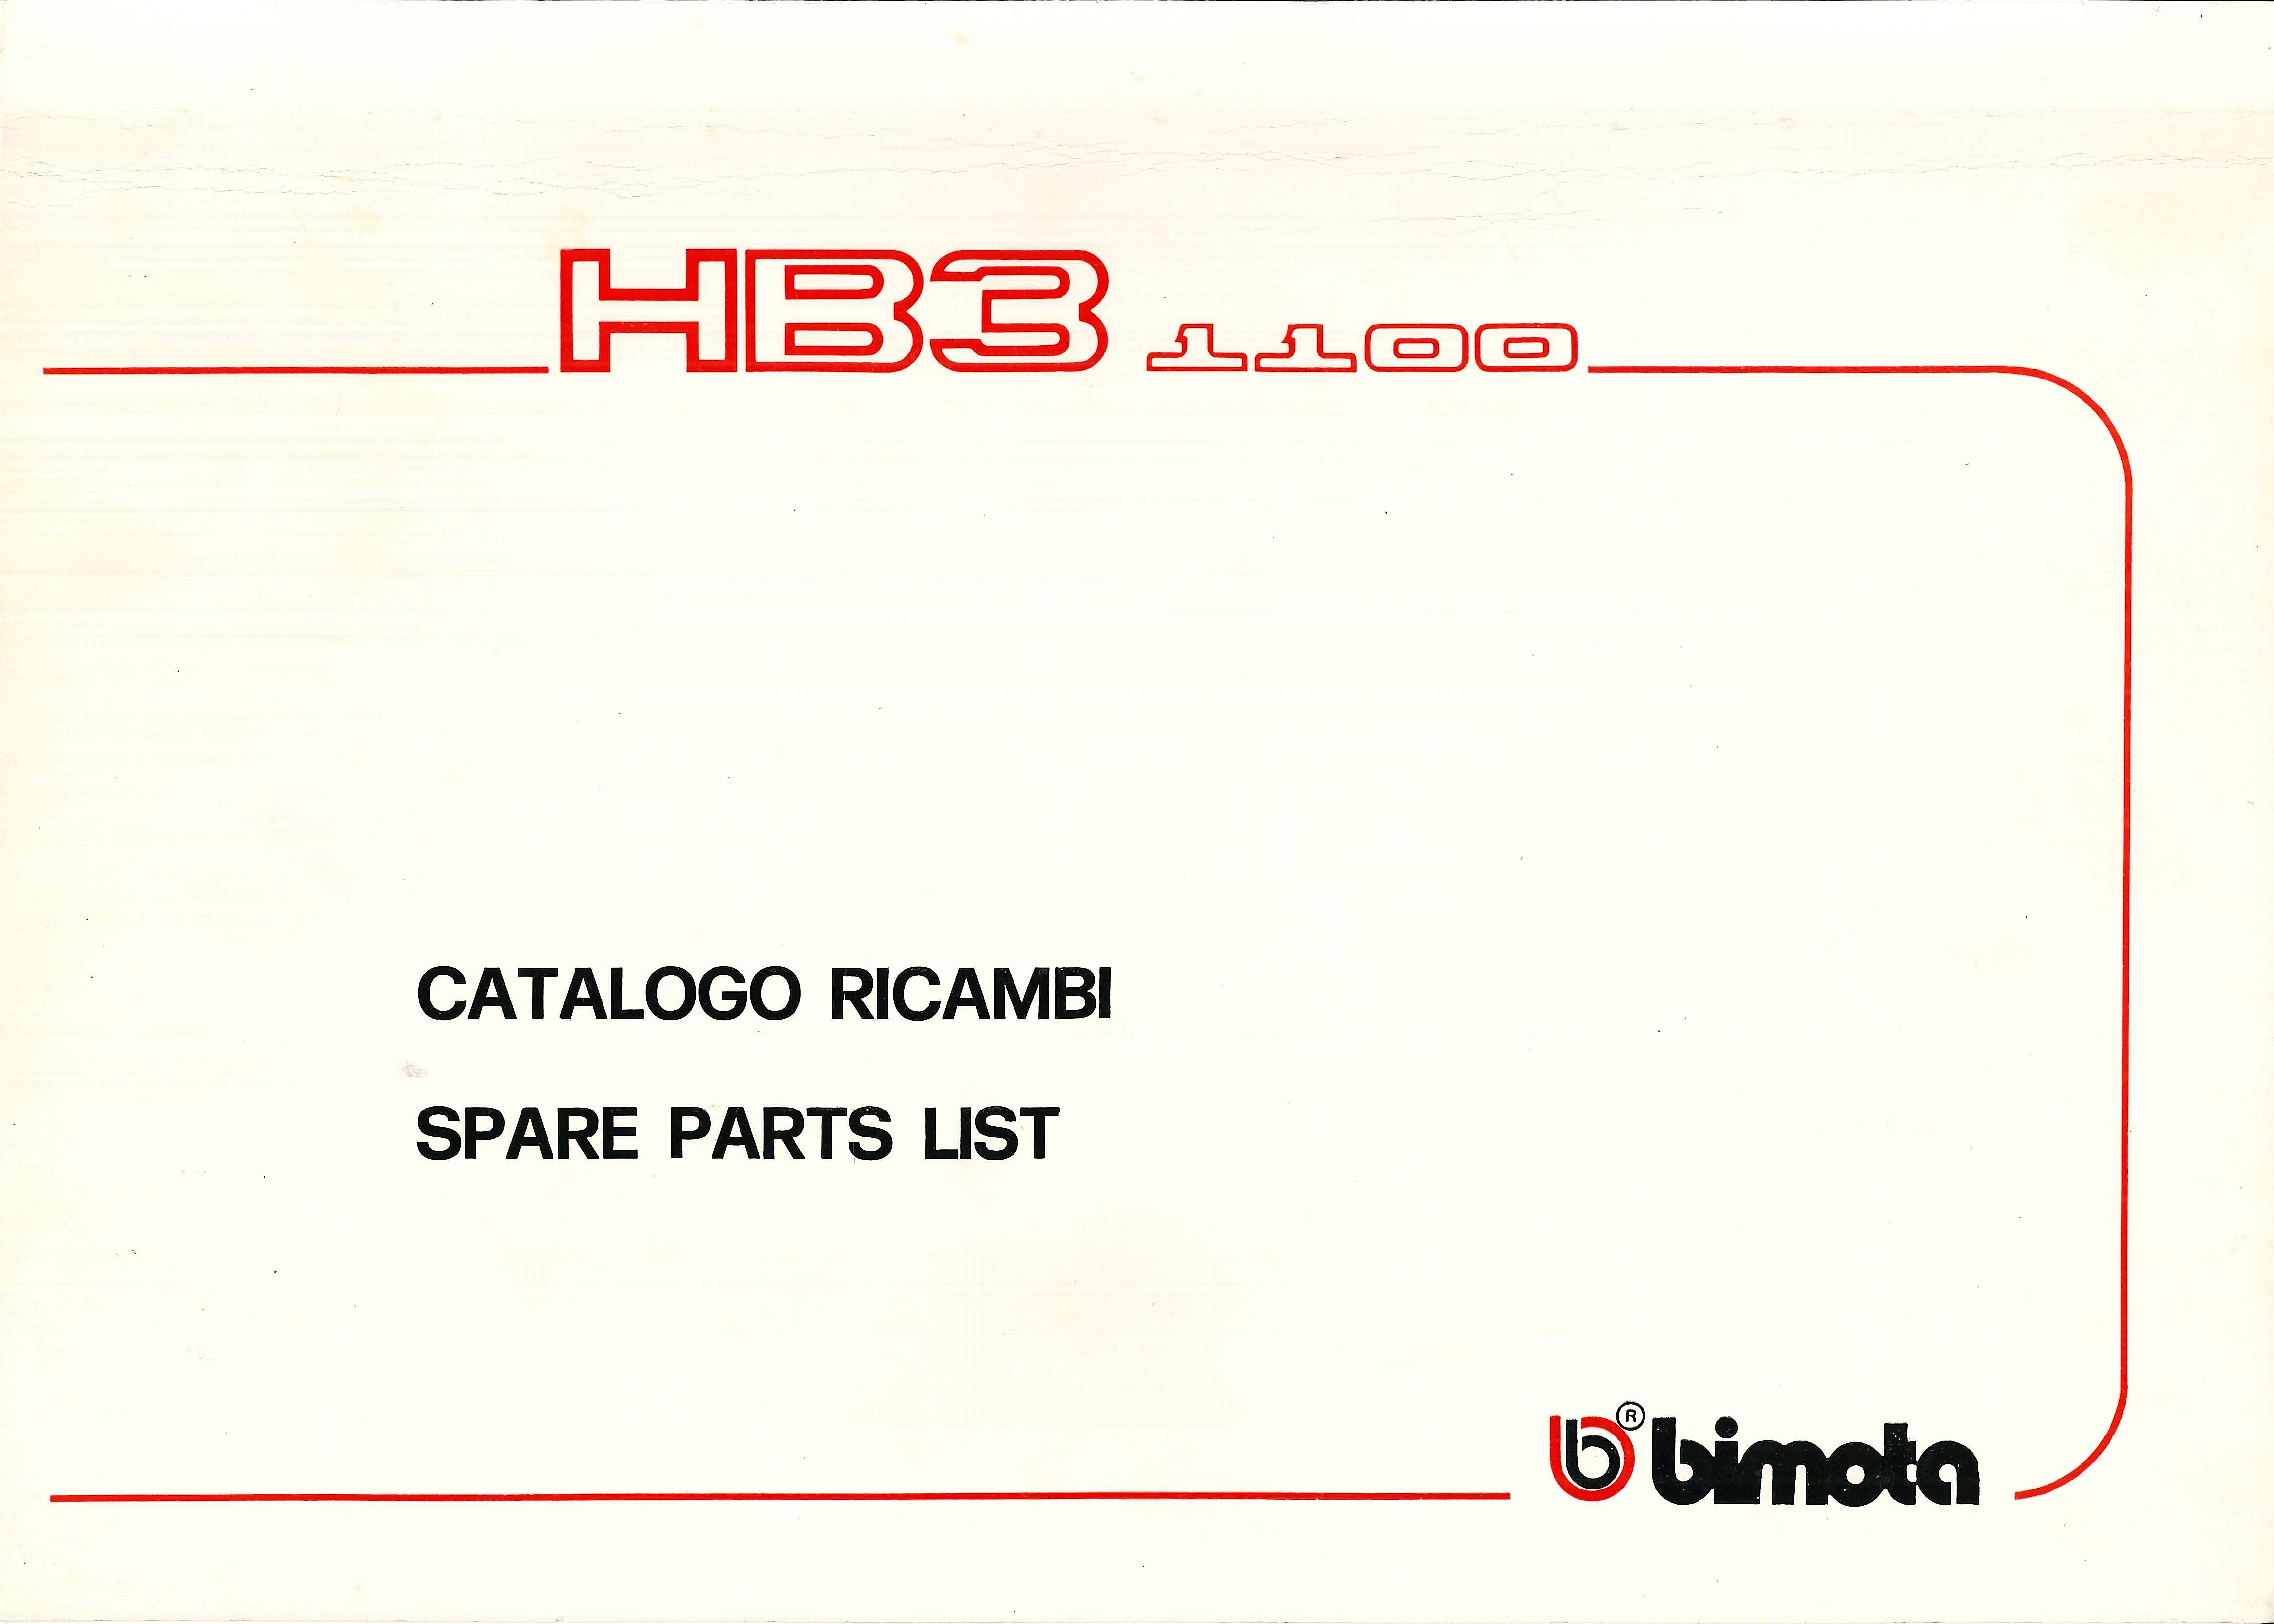 MANUALE RICAMBI BIMOTA HB3 1100